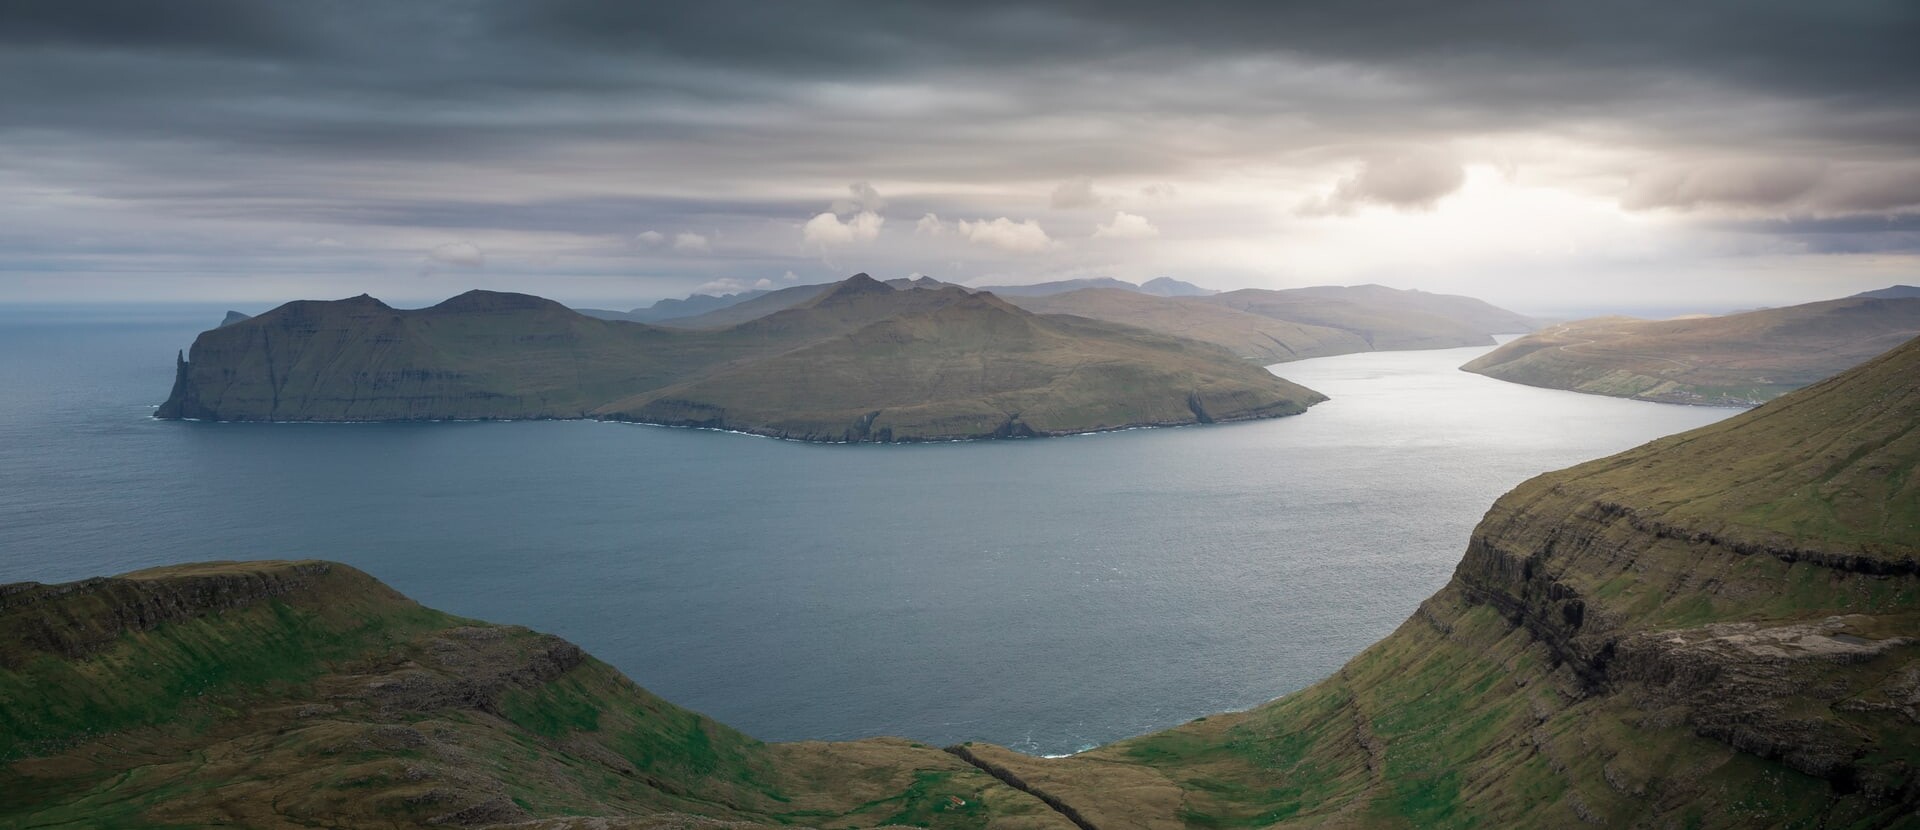 Faroe islands photo tour grand vistas